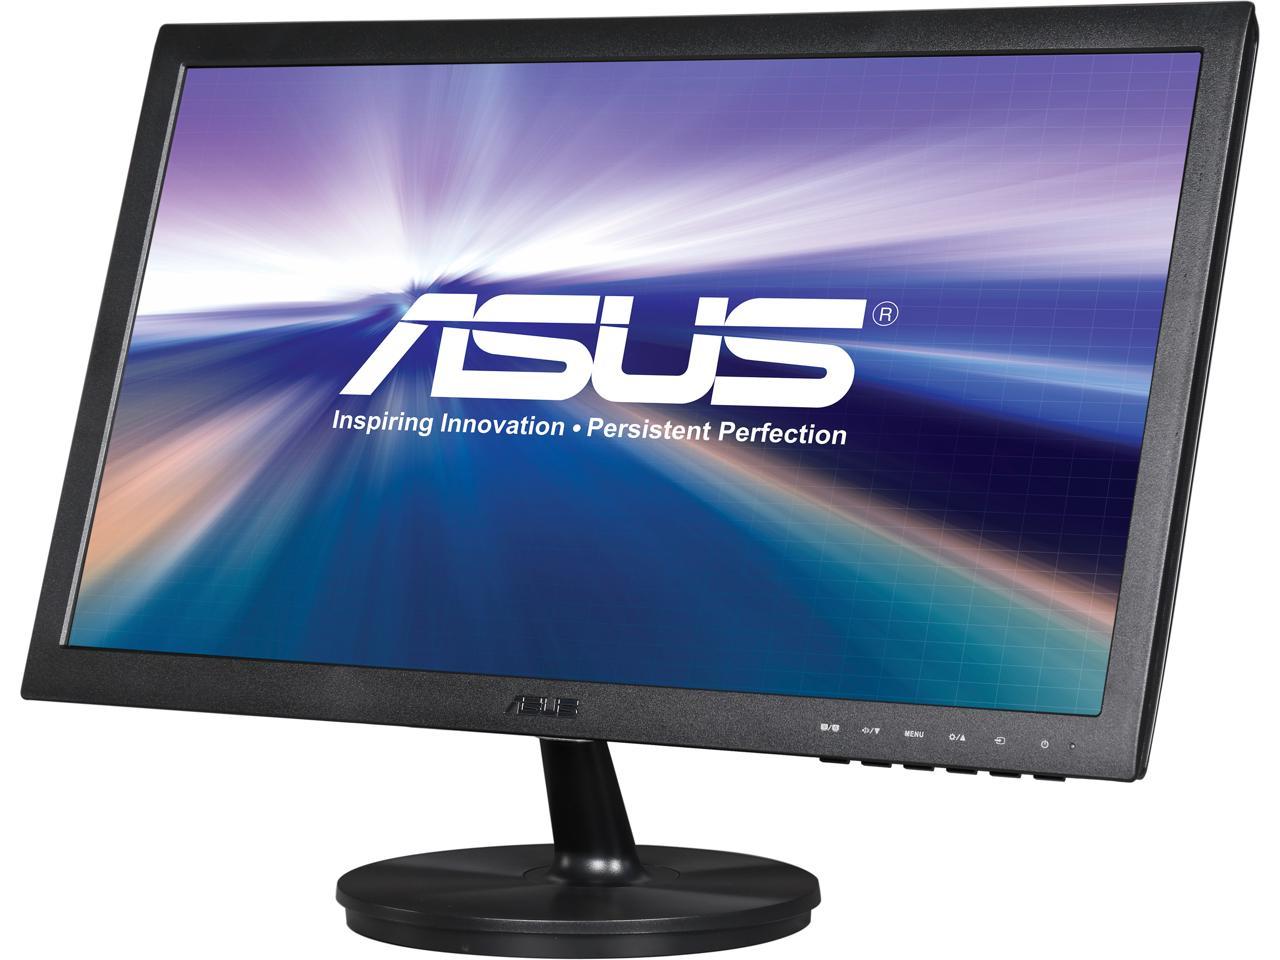 ASUS VS228T-P 22" (Actual size 21.5") Full HD 1920 x 1080 5ms VGA DVI Built-in Speakers LED Backlit LCD Monitor